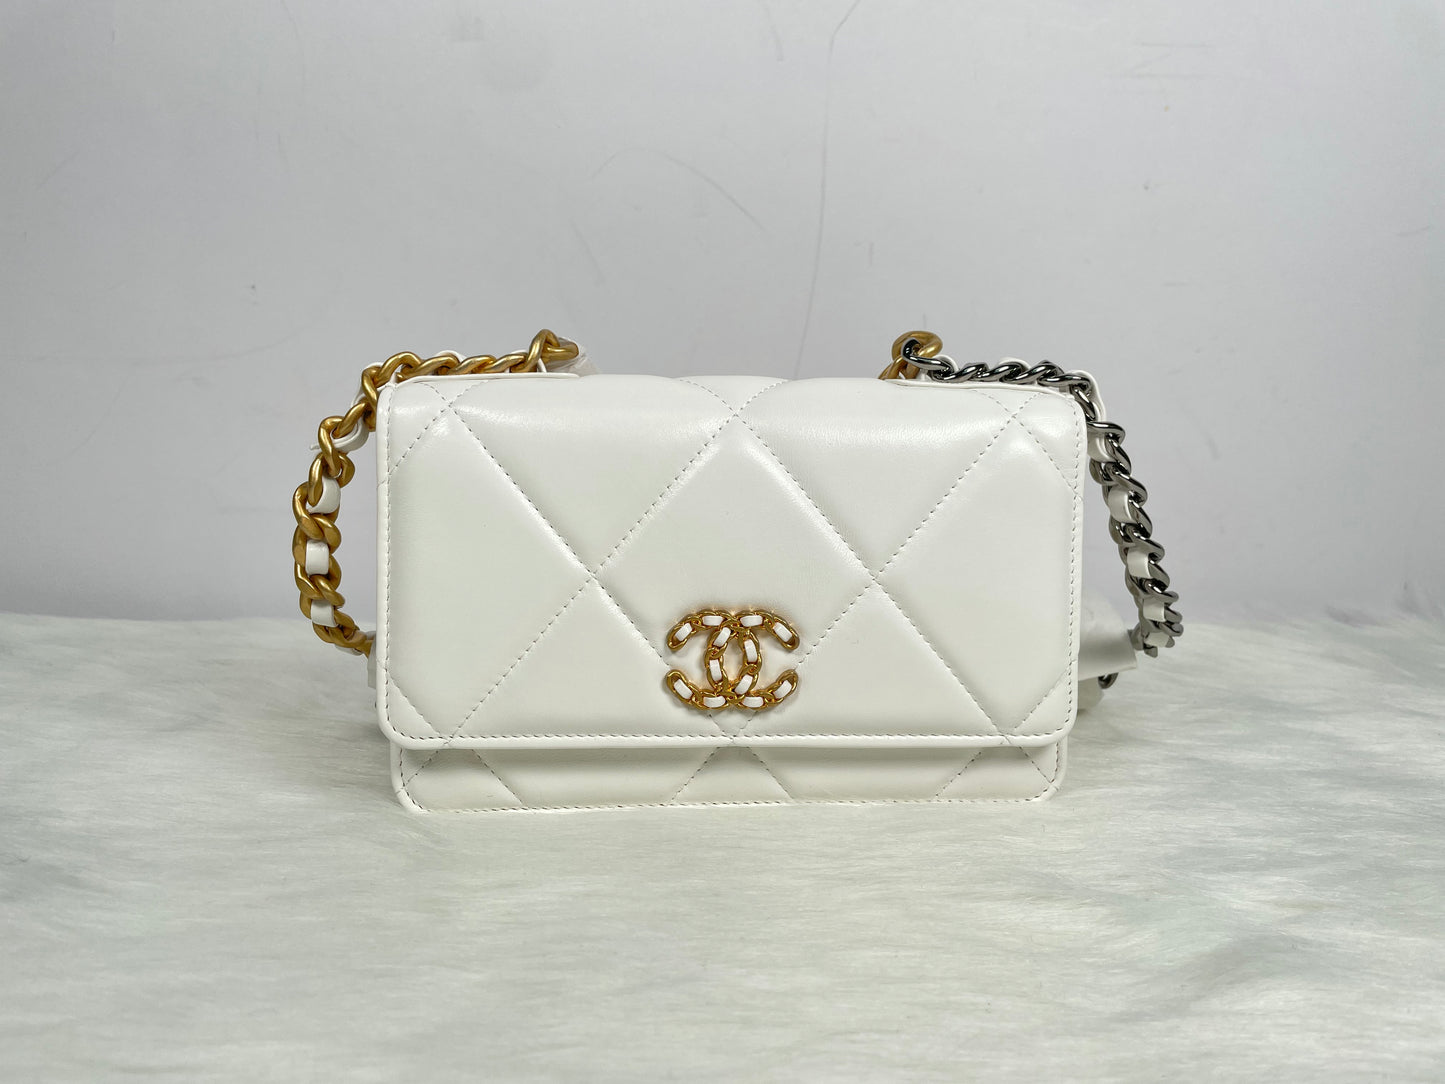 Chanel 19 Wallet On Chain 白色羊皮金扣